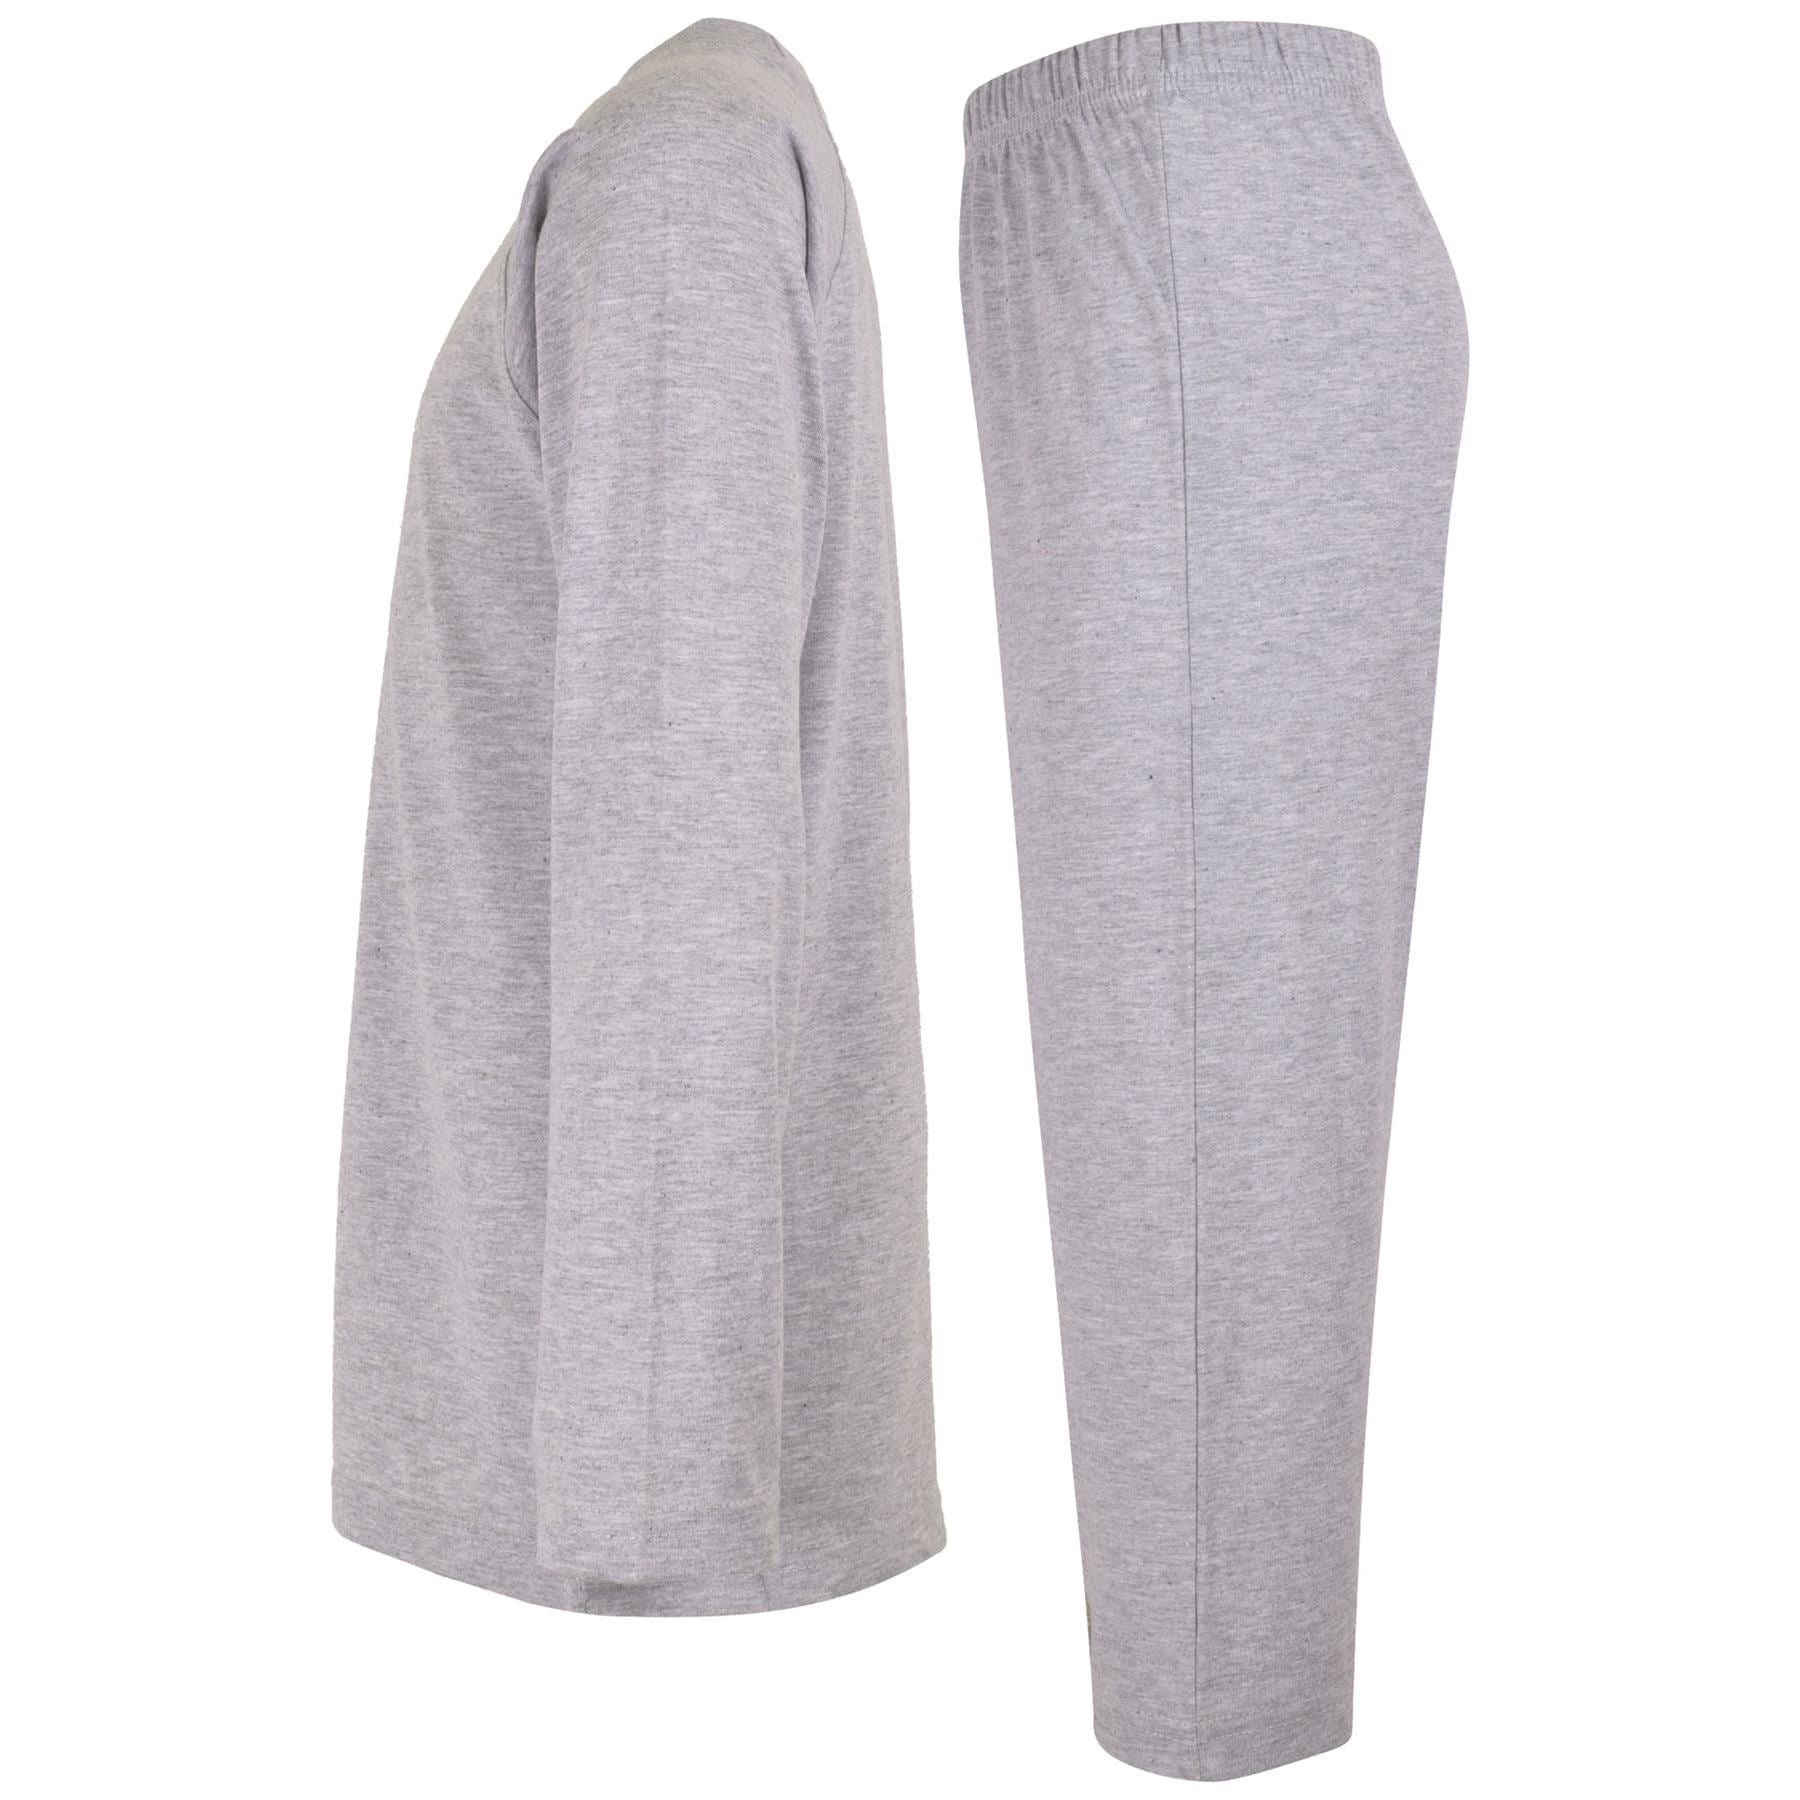 A2Z 4 Kids Girls Boys Raglan Sleeves Plain Pyjamas 2 Piece Comfort Sleepwear Set